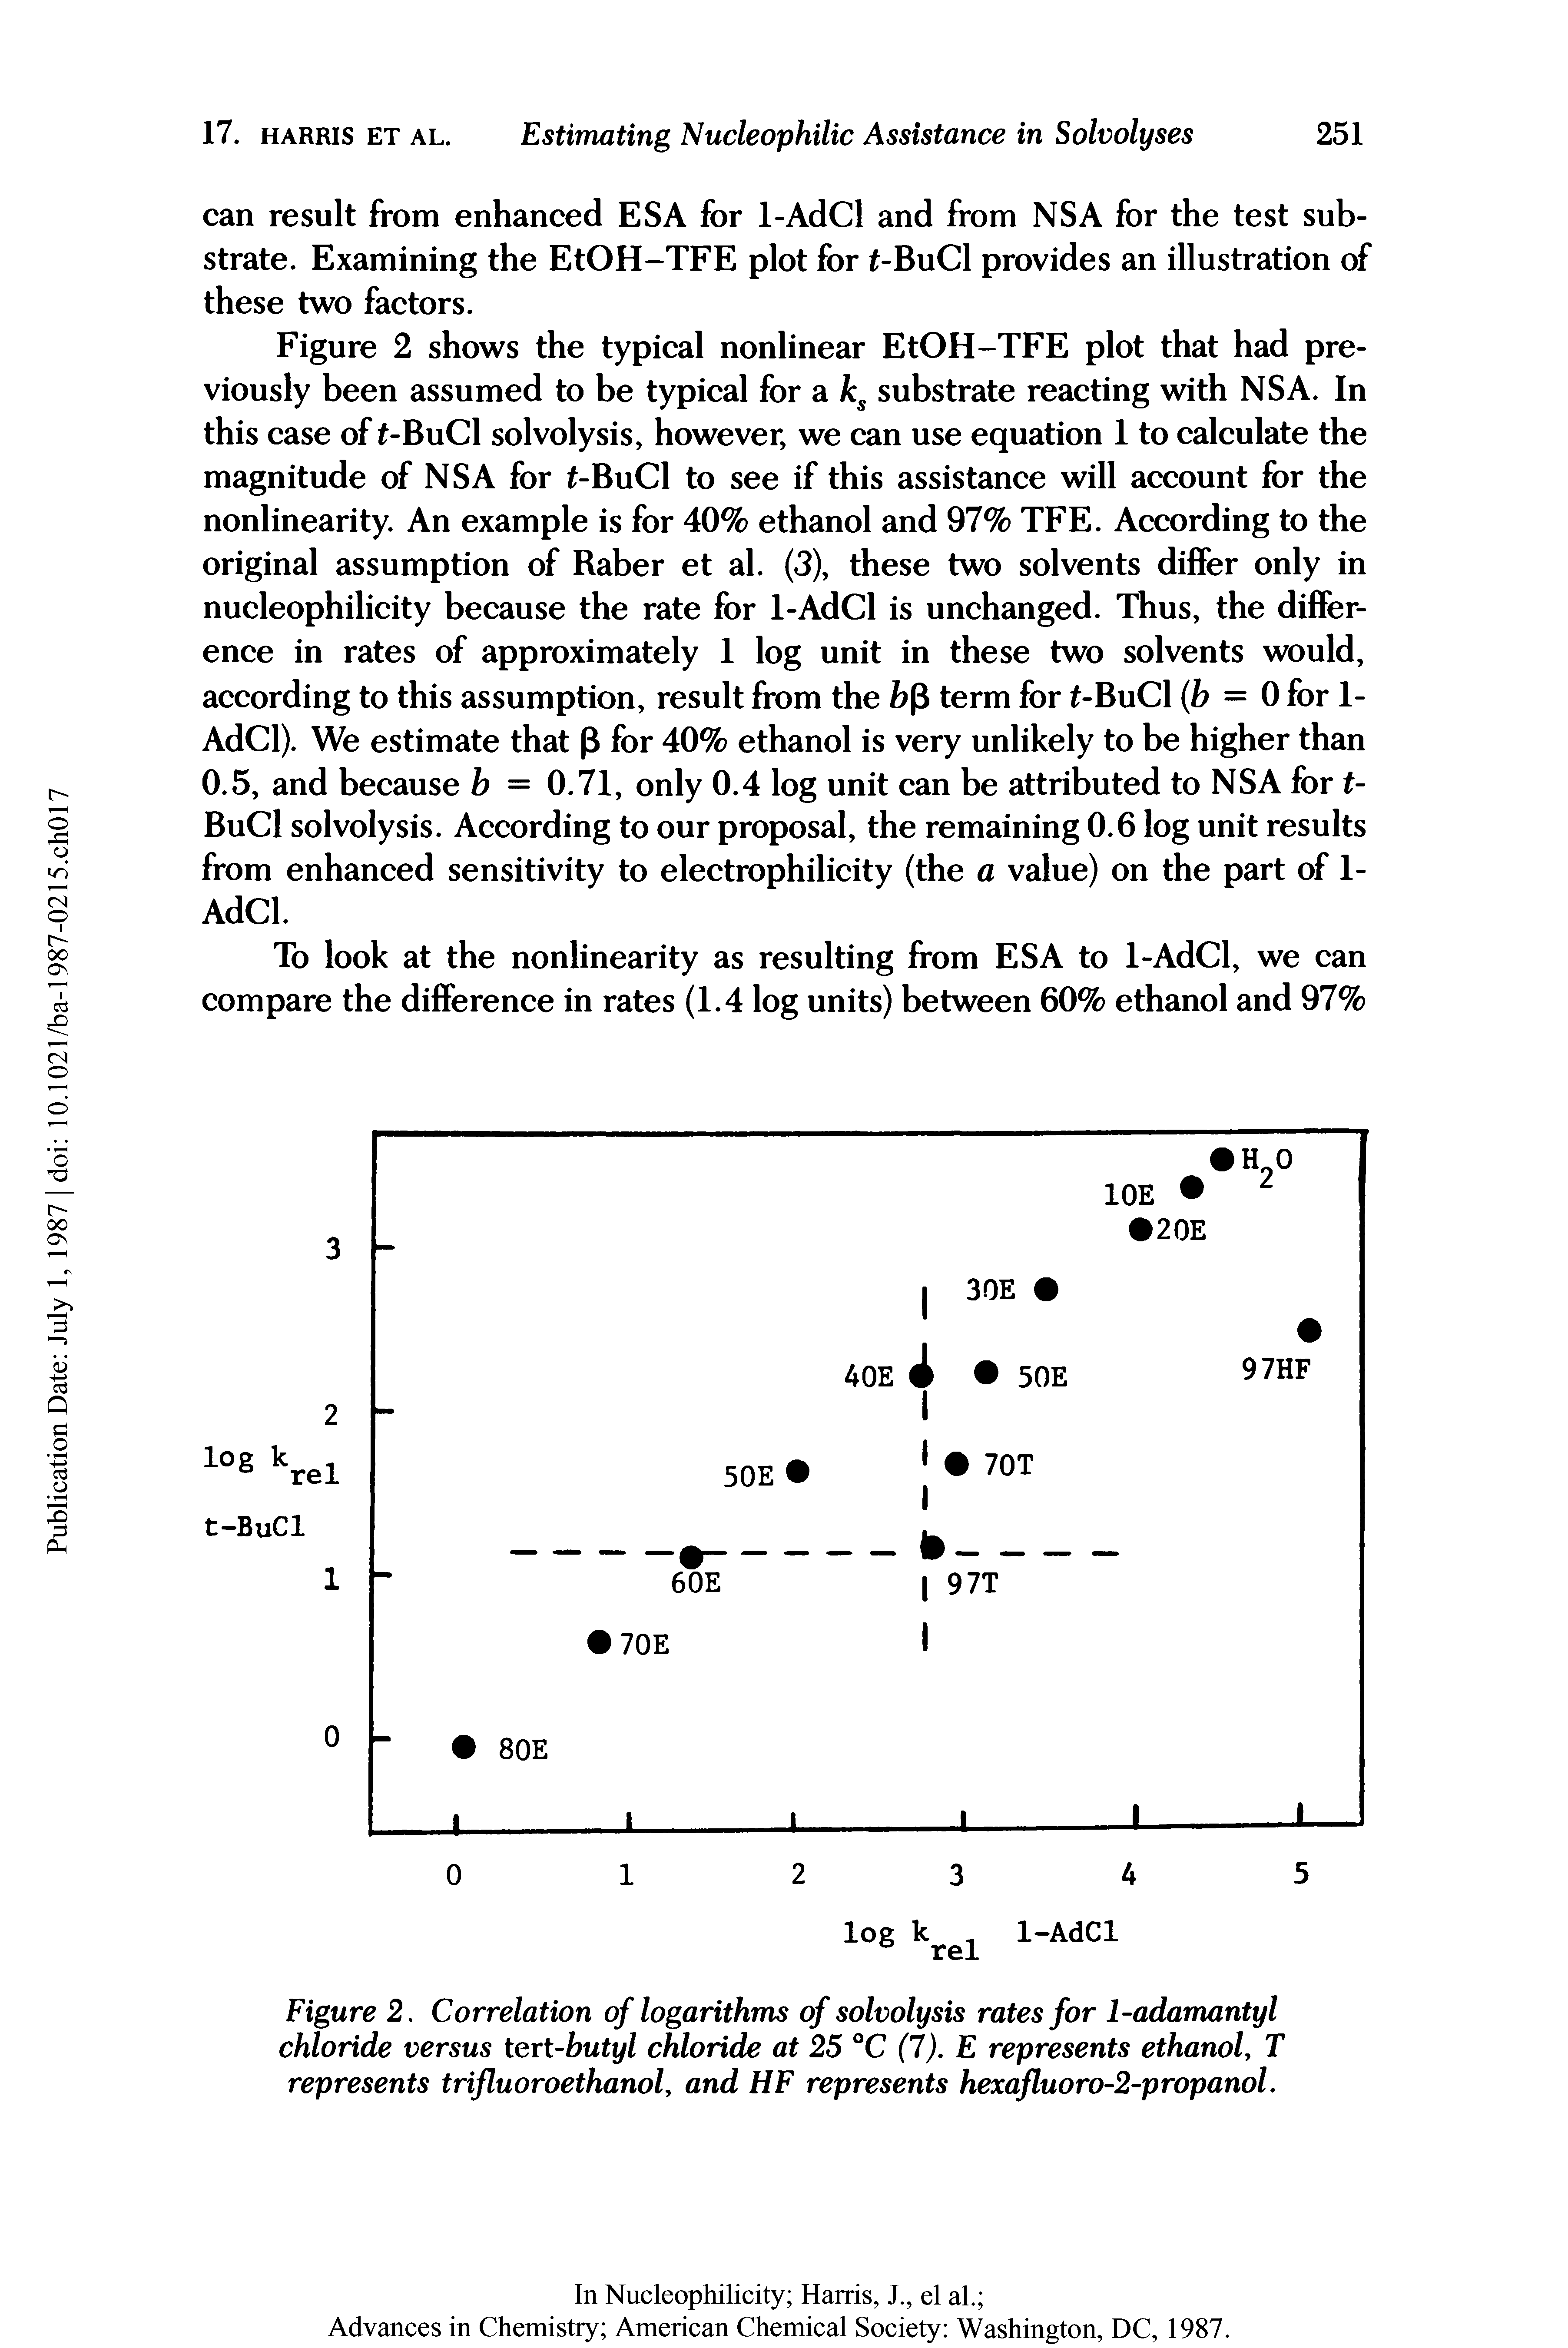 Figure 2. Correlation of logarithms of solvolysis rates for 1-adamantyl chloride versus tert-butyl chloride at 25 °C (7). E represents ethanol, T represents trifluoroethanol, and HF represents hexafluoro-2-propanoL...